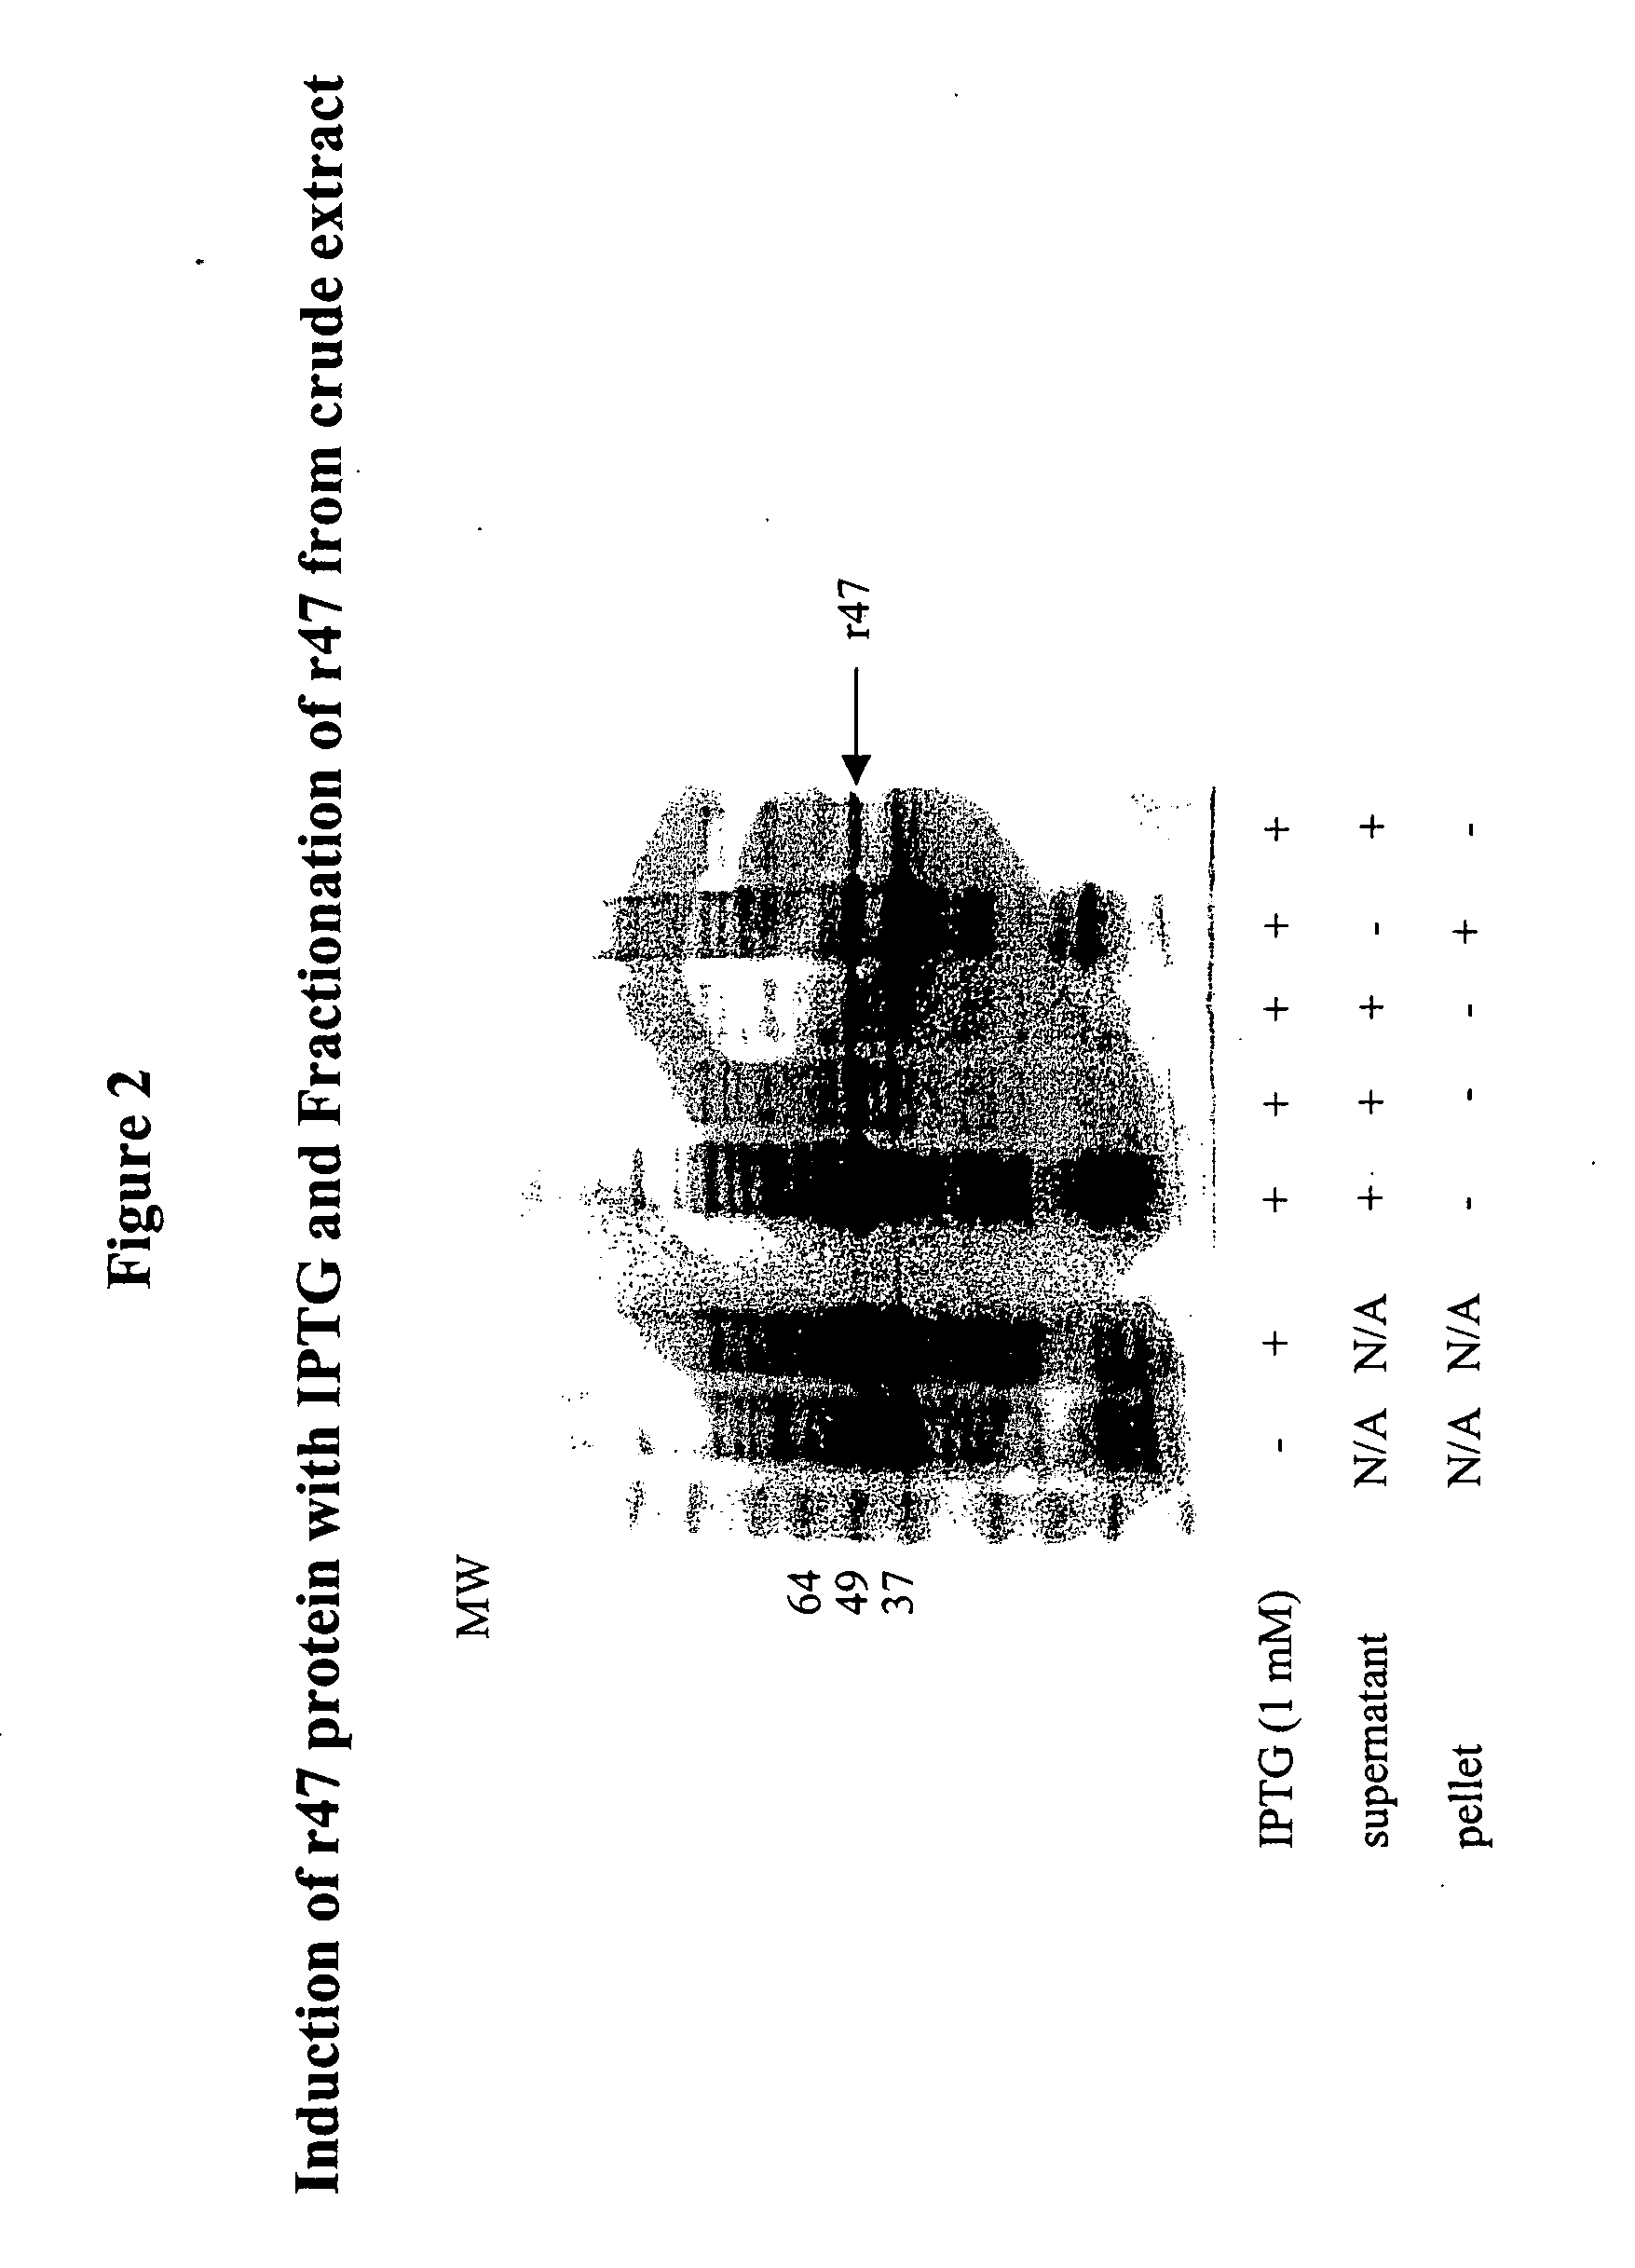 Orientia tsutsugamushi truncated recombinant outer membrane protein (r47) and (r56) vaccines diagnostics and therapeutics for scrub typhus and HIV infection